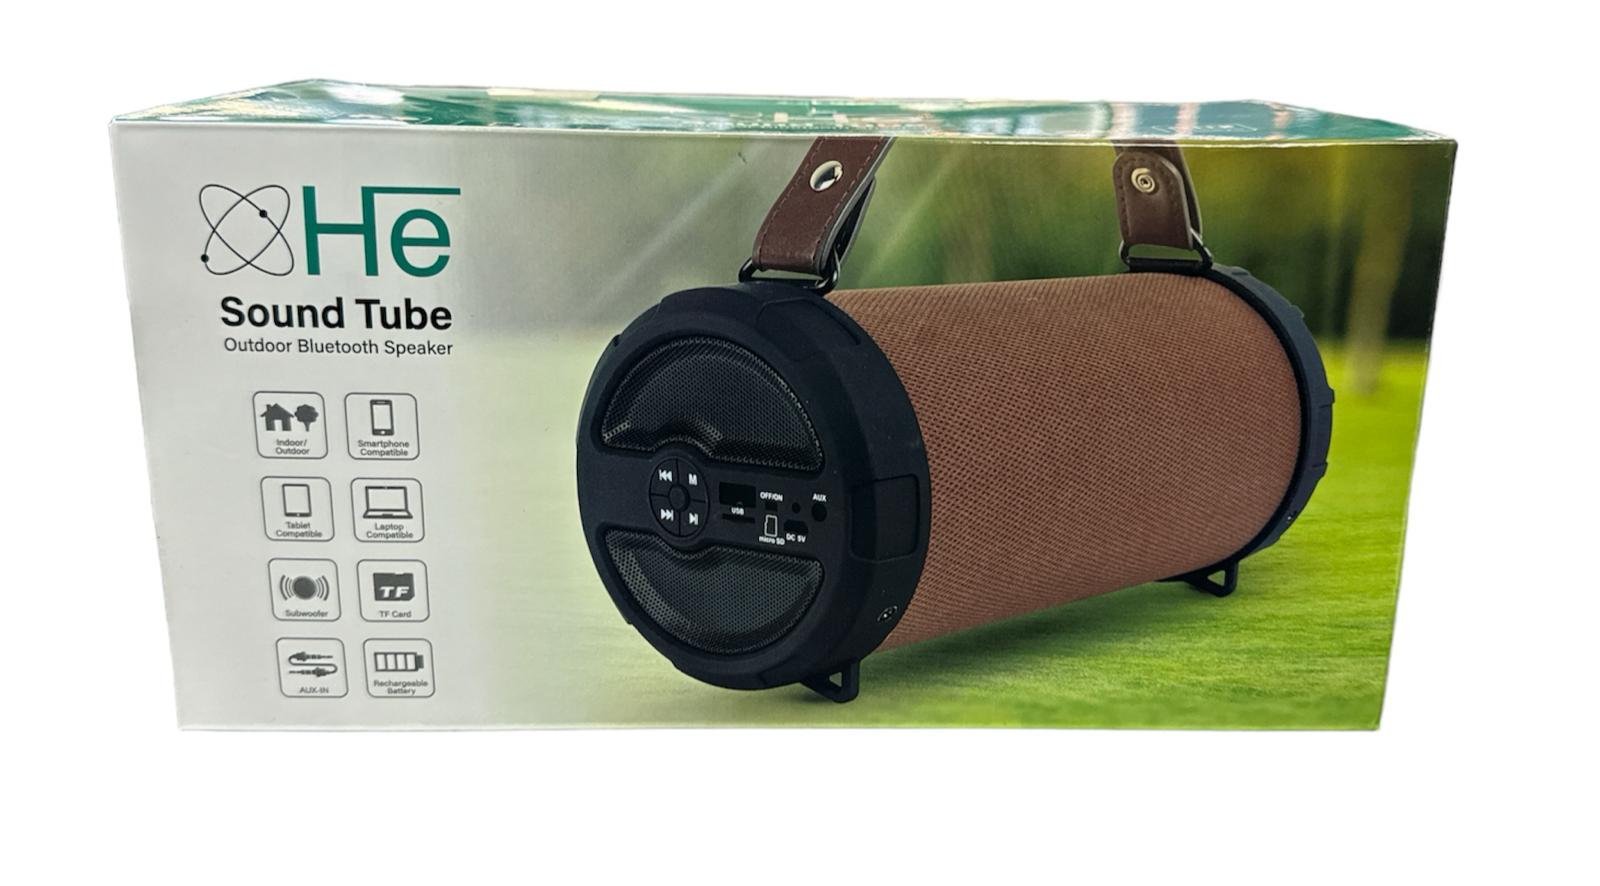 HE Sound Tube Outdoor Bluetooth Speaker